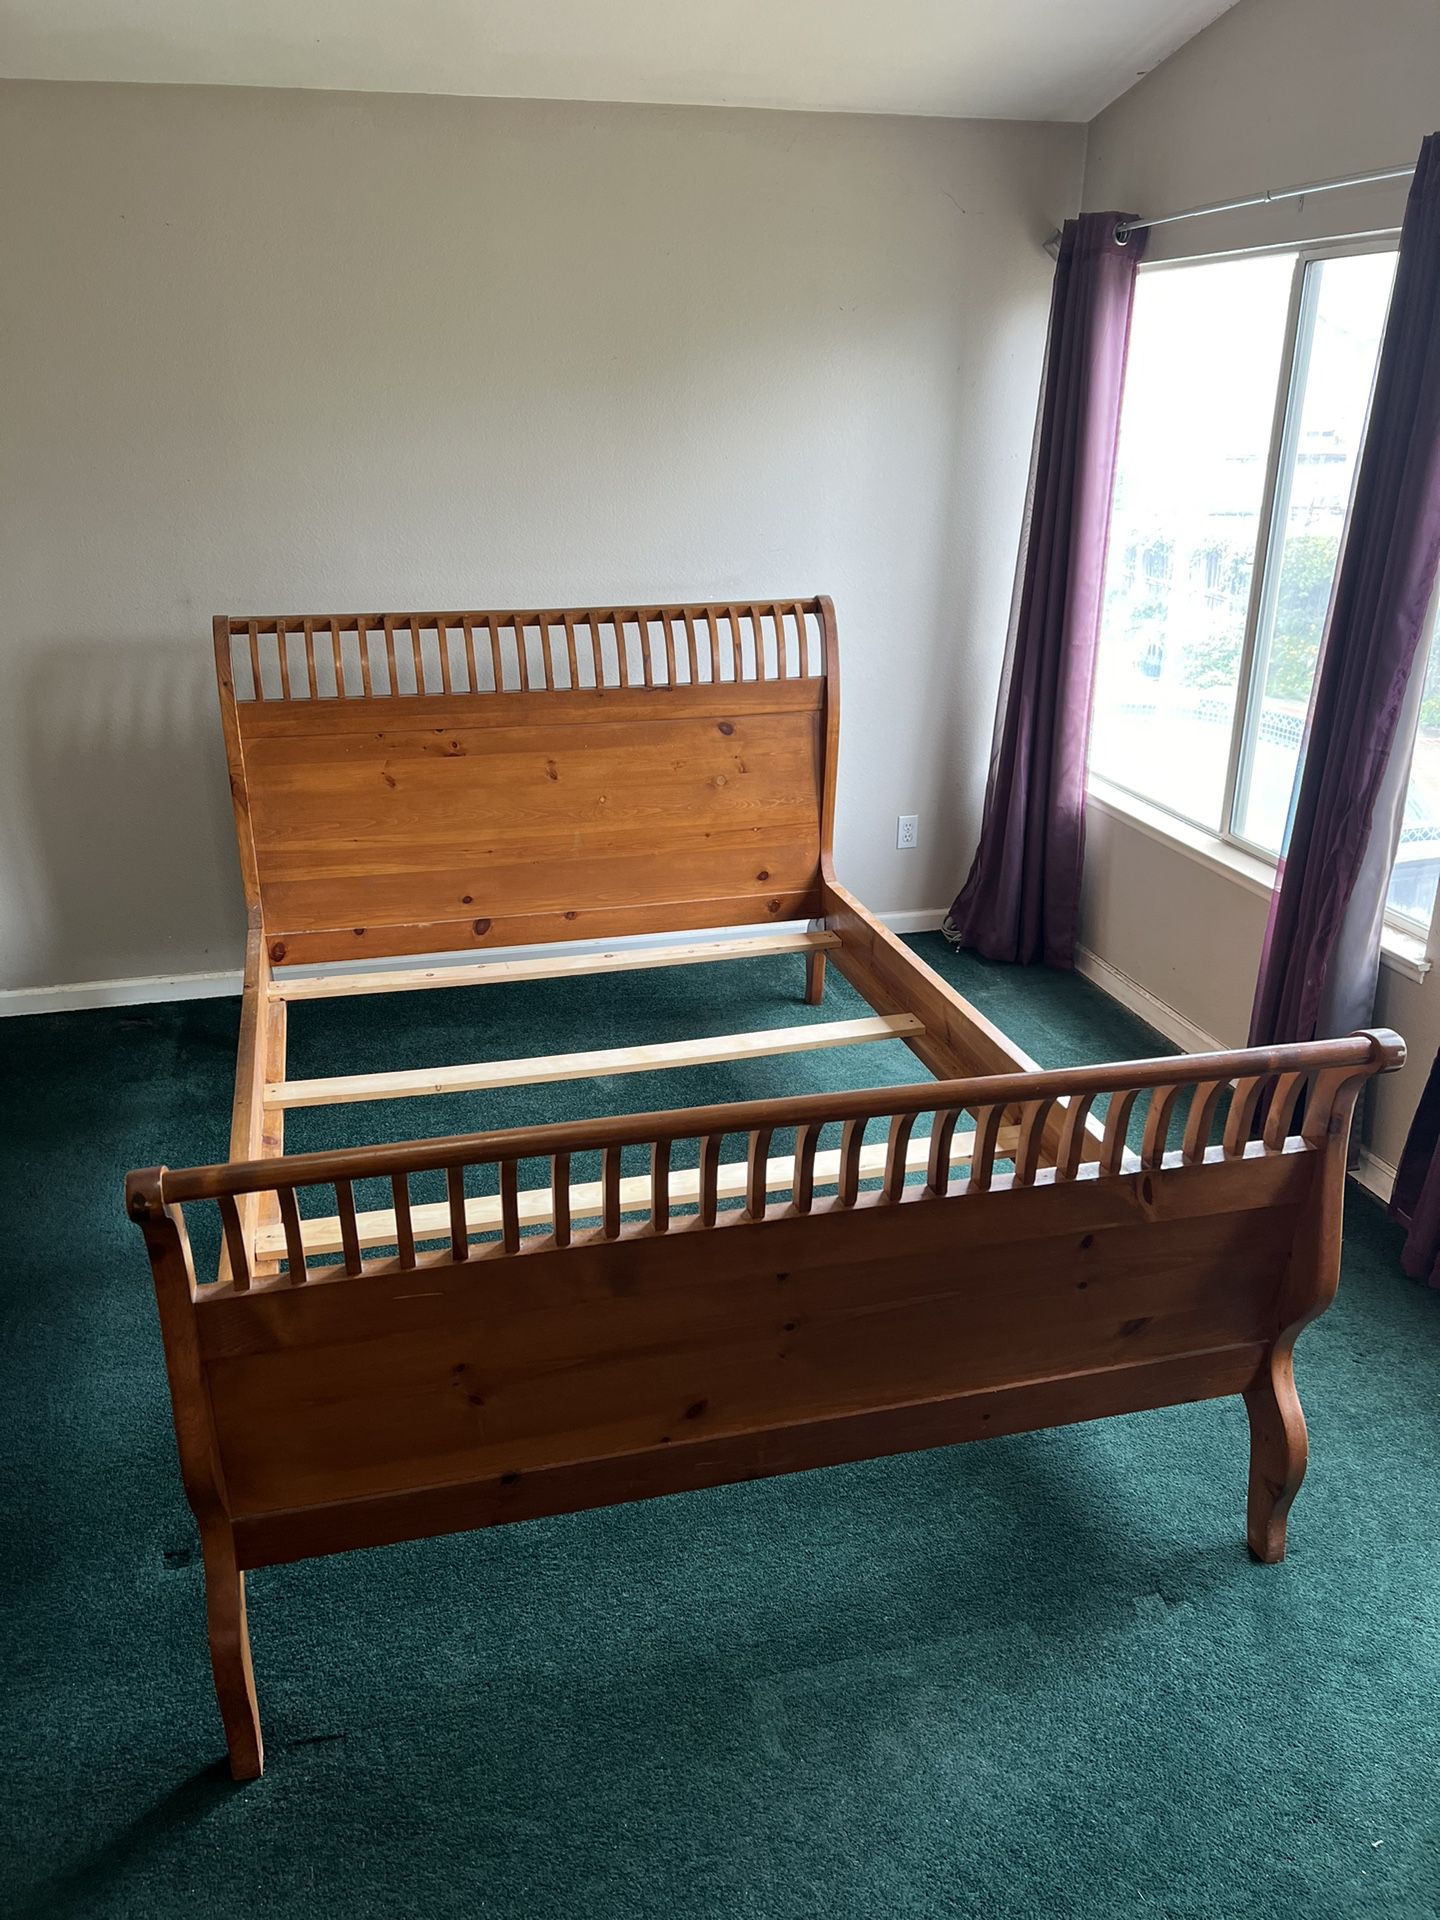 Queen Wood Bed Frame